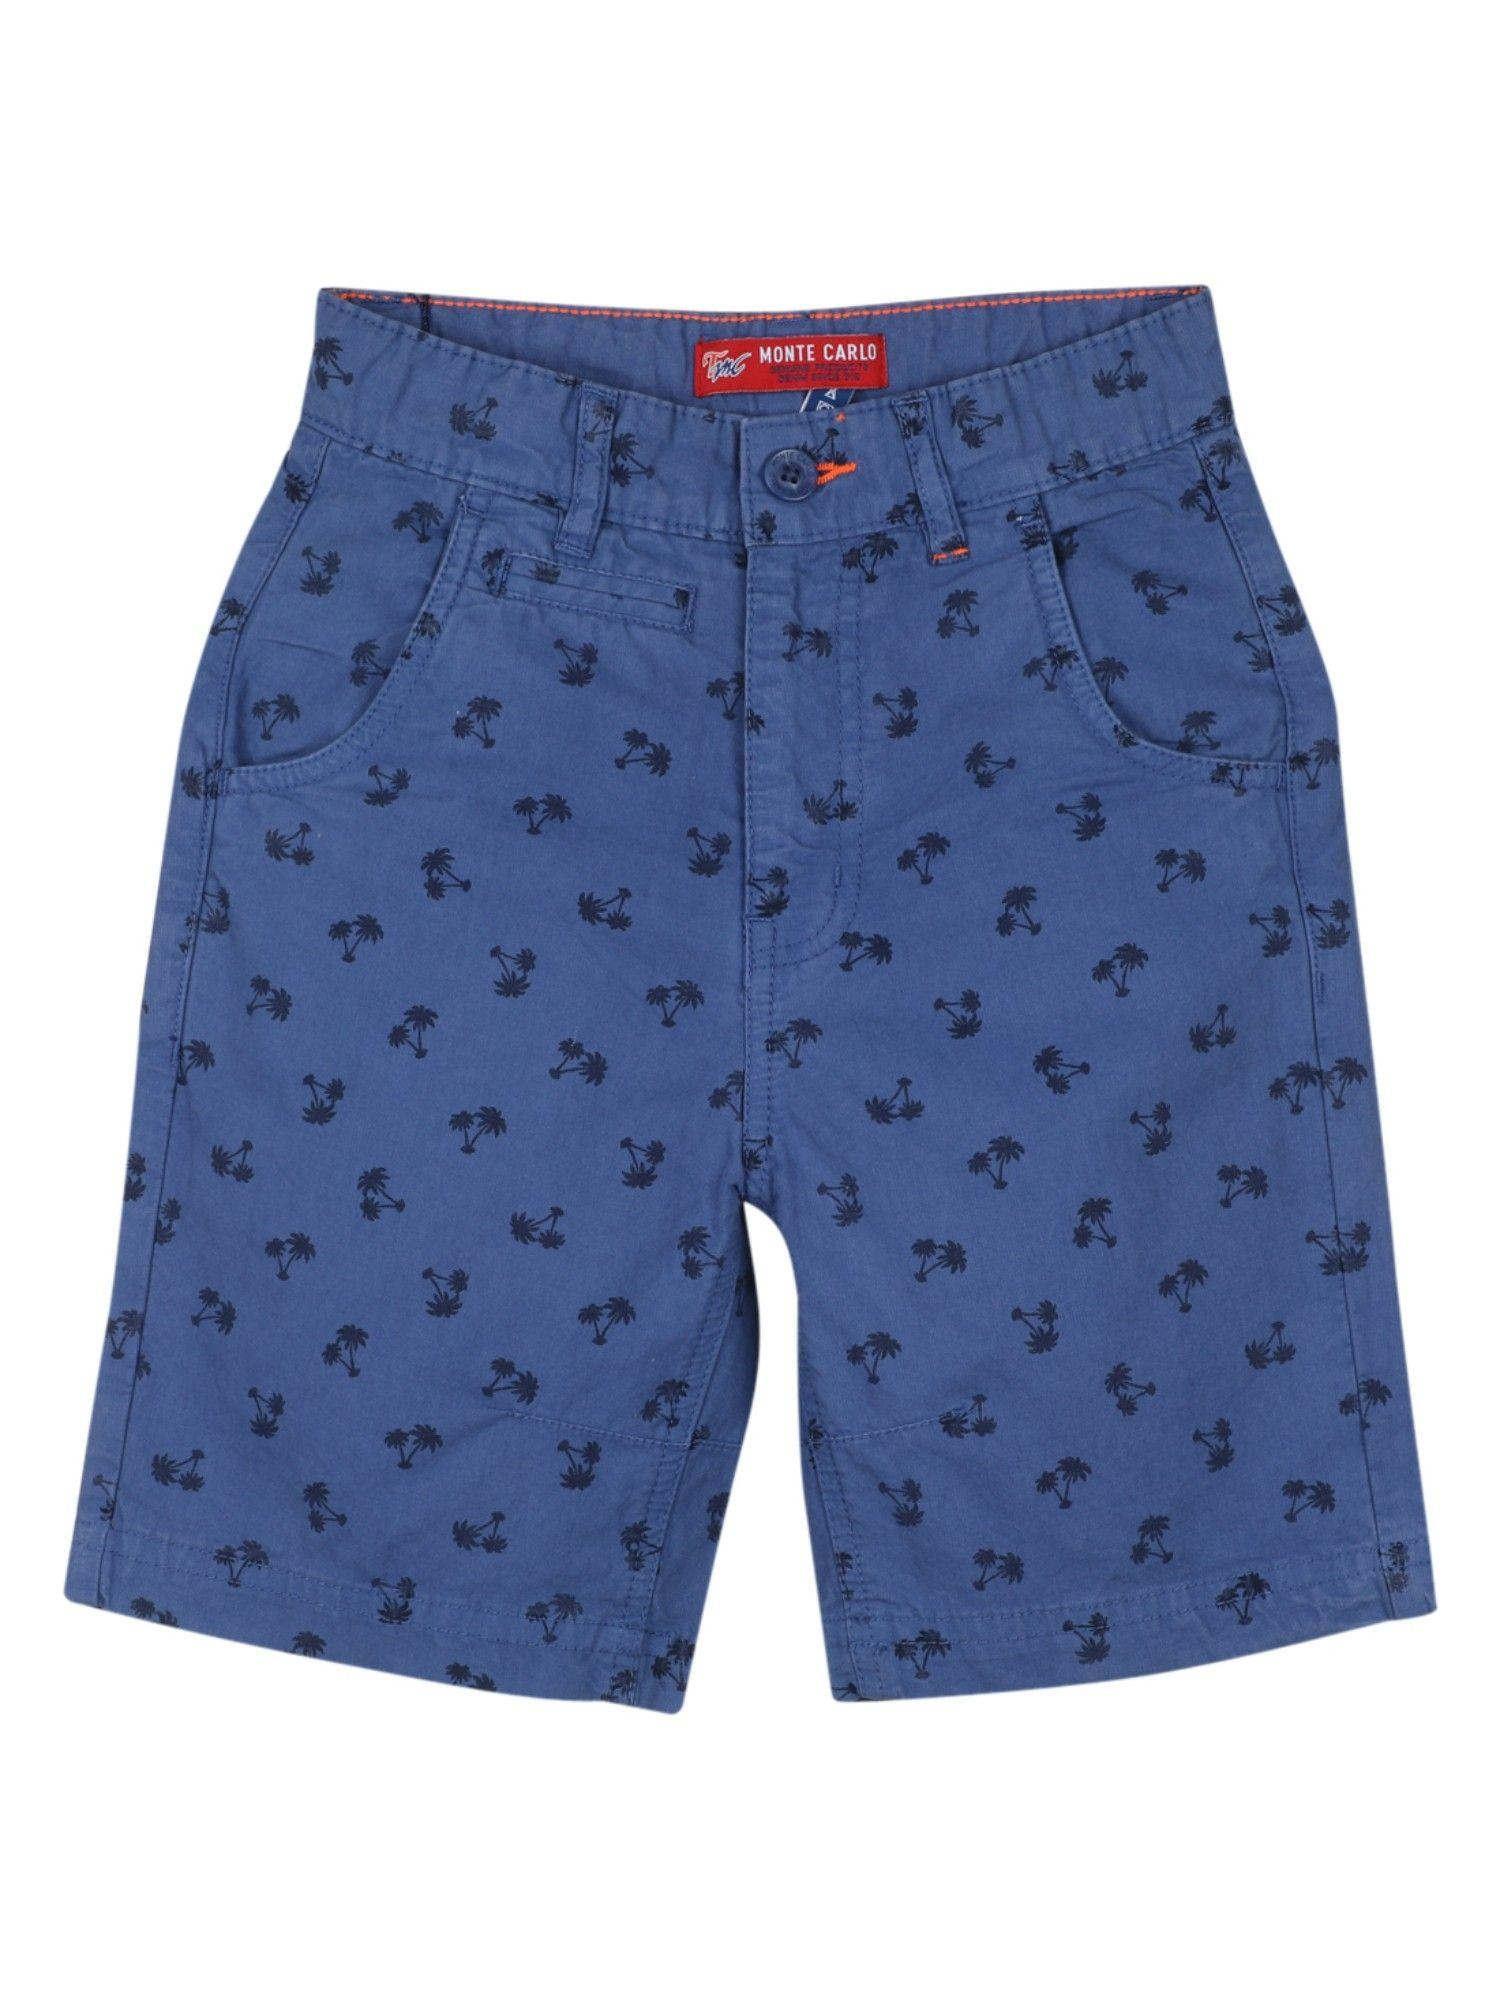 boys-cotton-blend-printed-blue-shorts